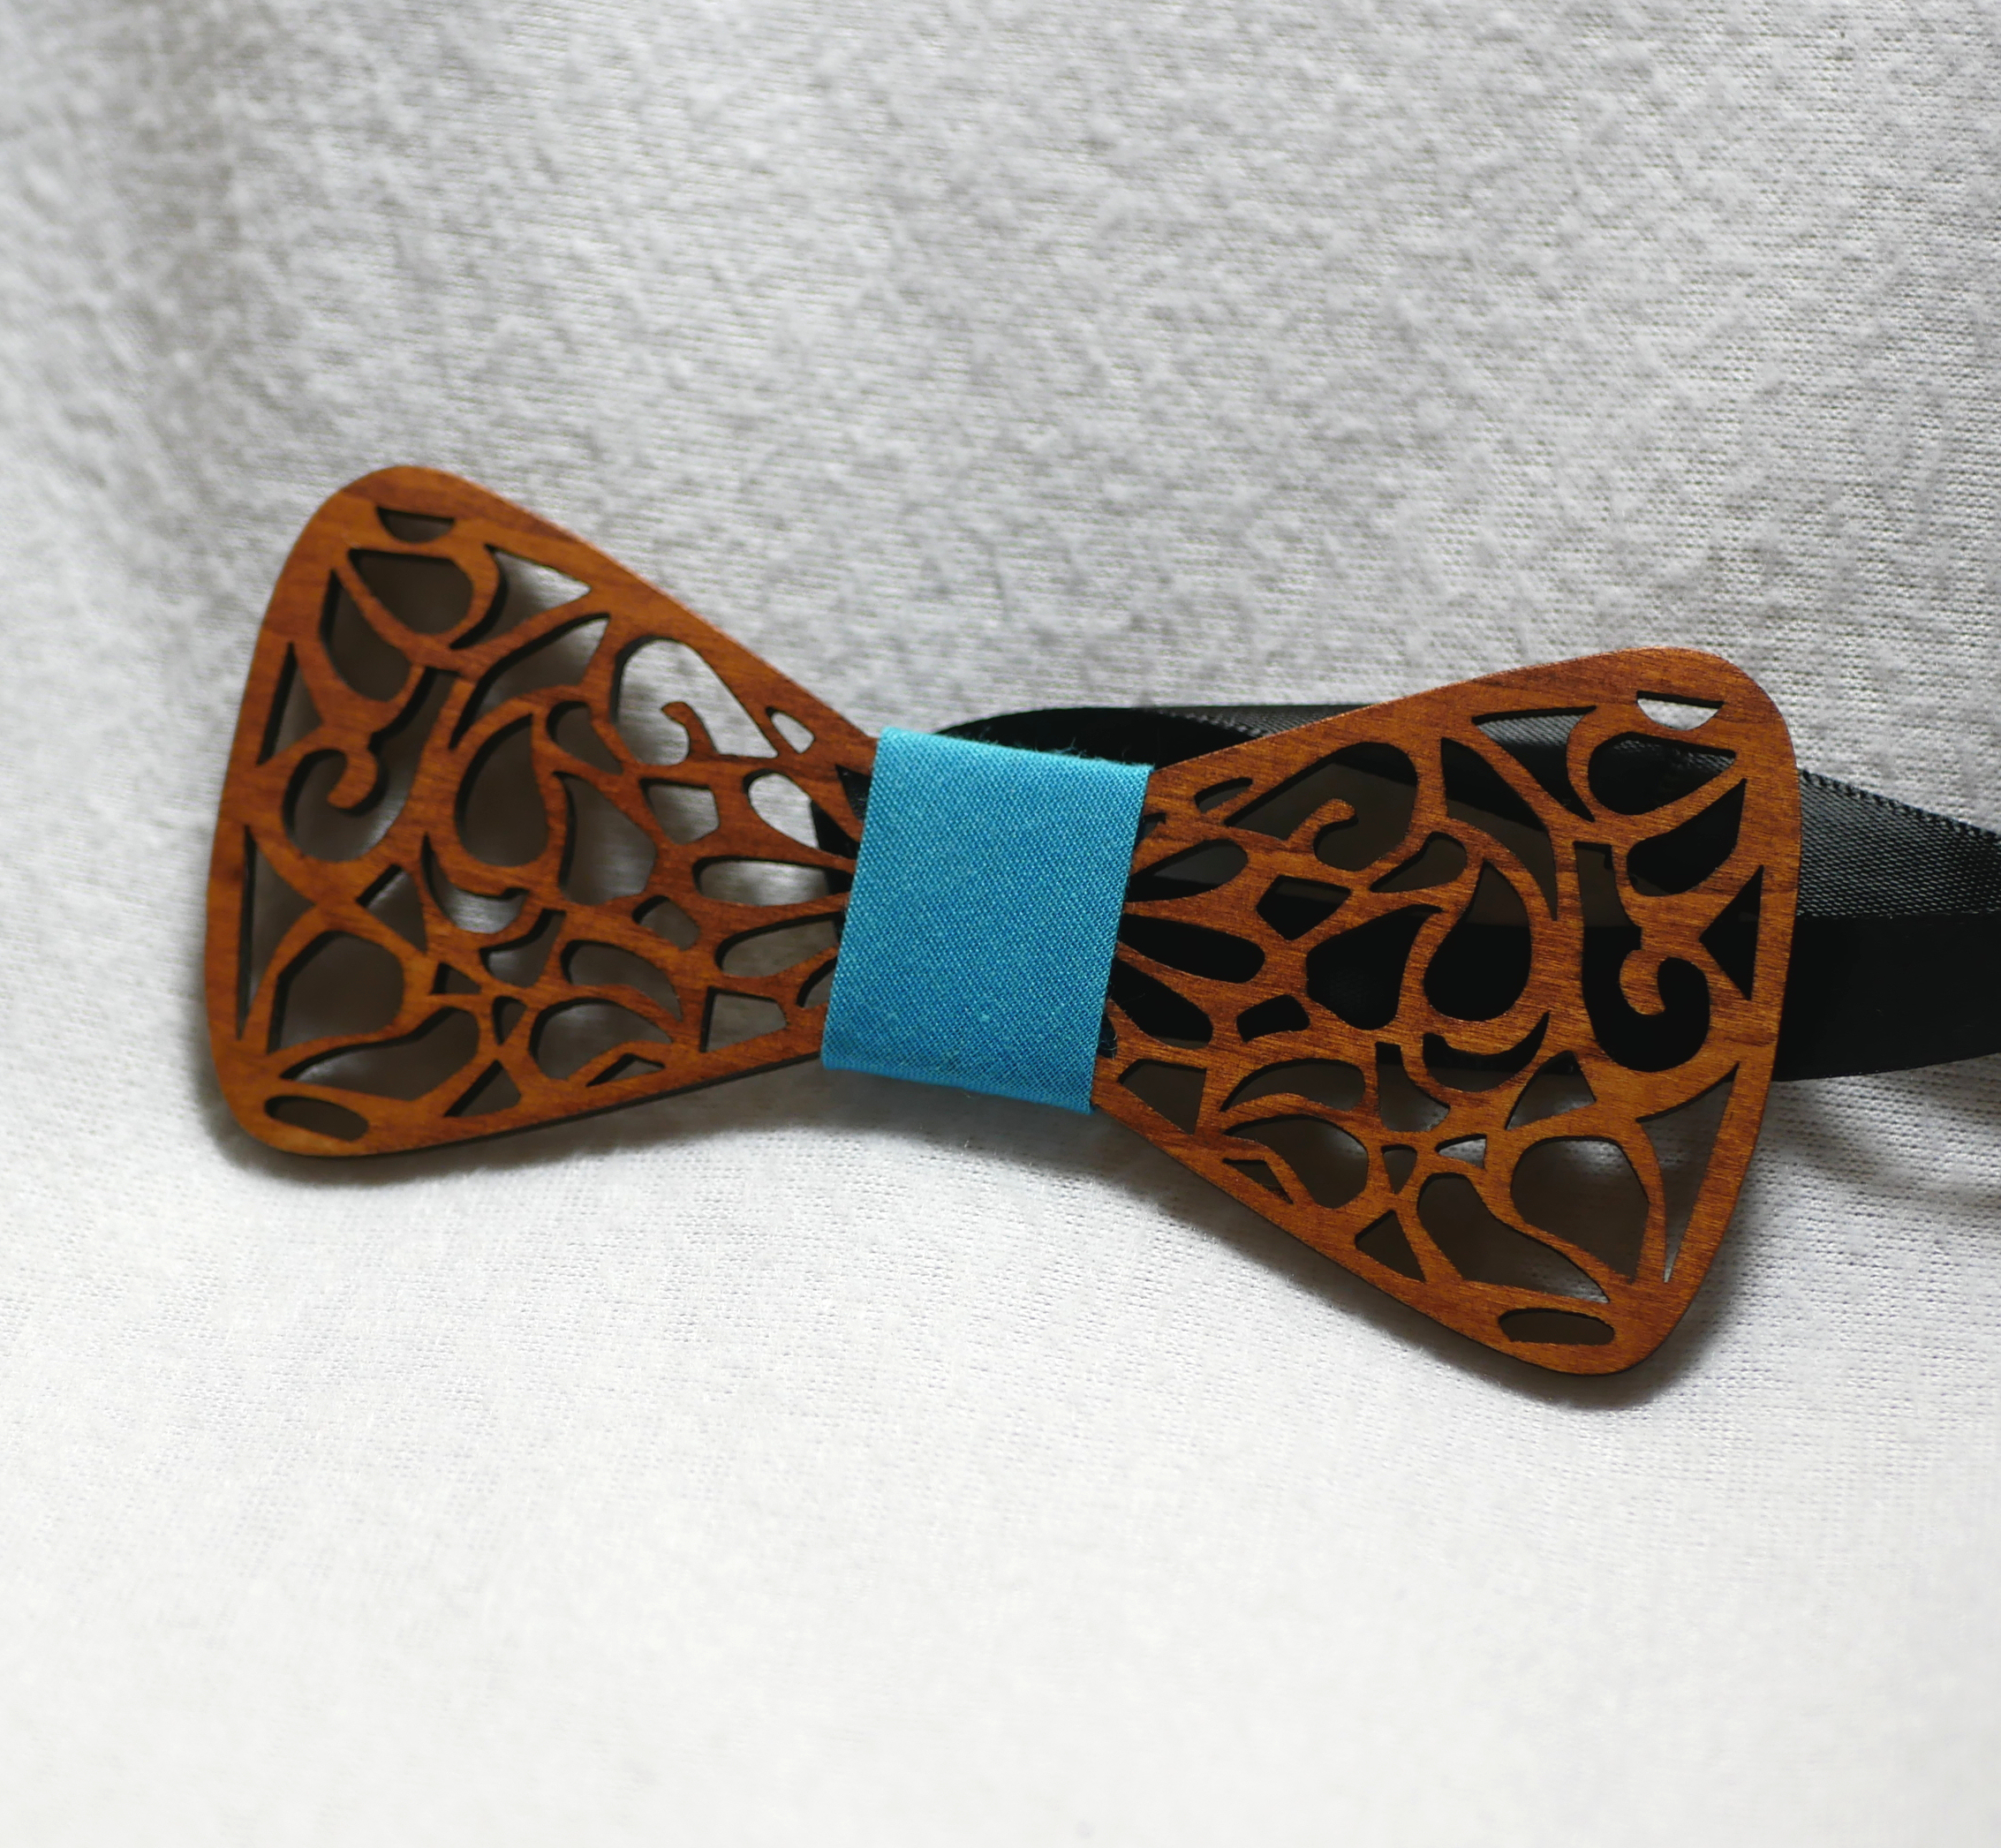 Schmetterlingsknoten Holz ausgehöhlt Band türkis